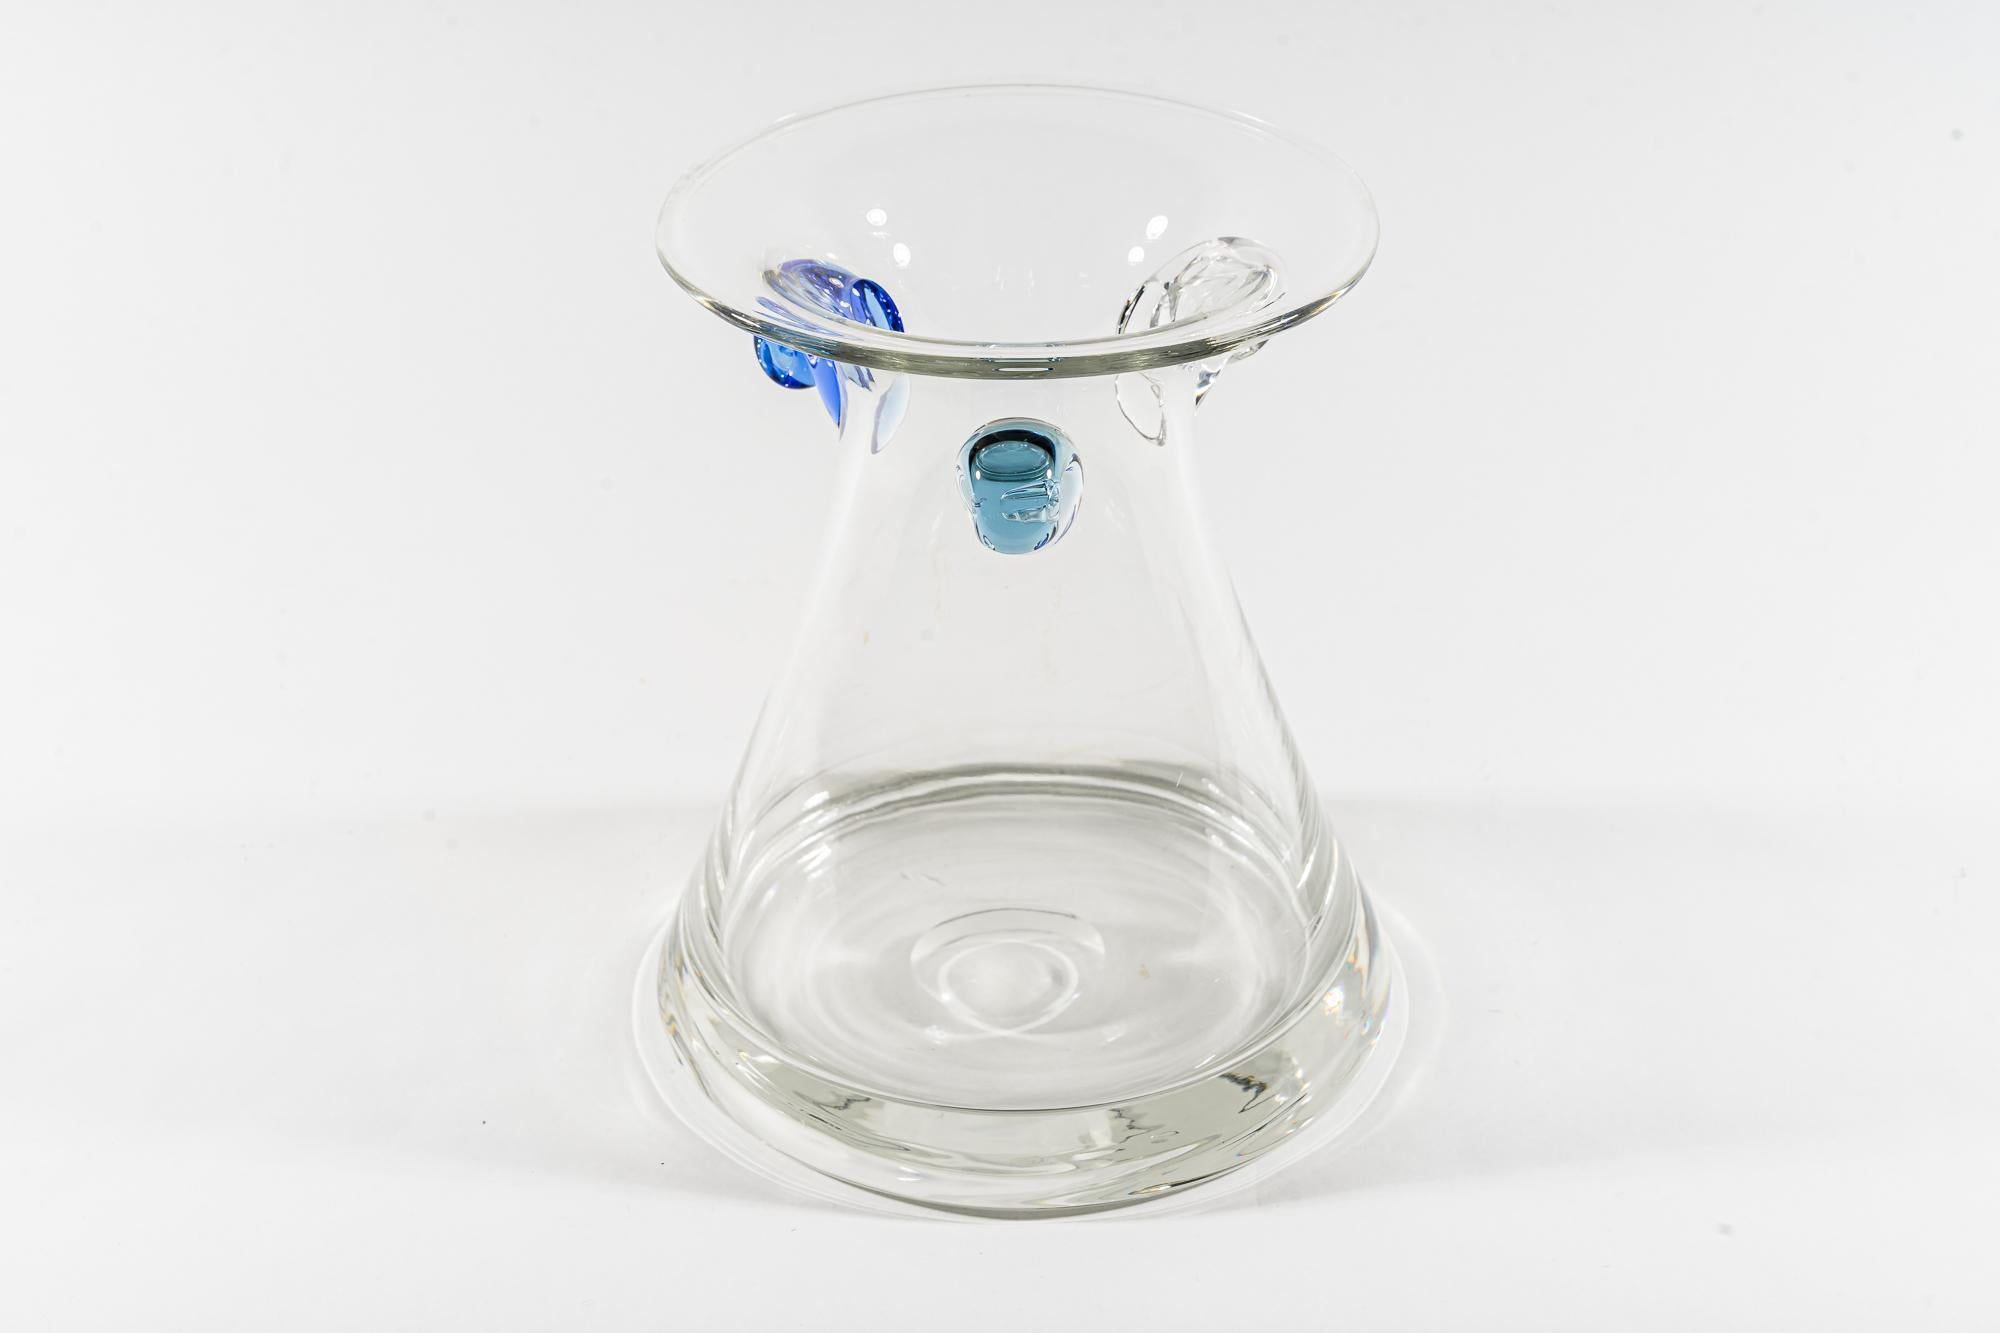 Murano glass vase italian around 1970s
Original condition